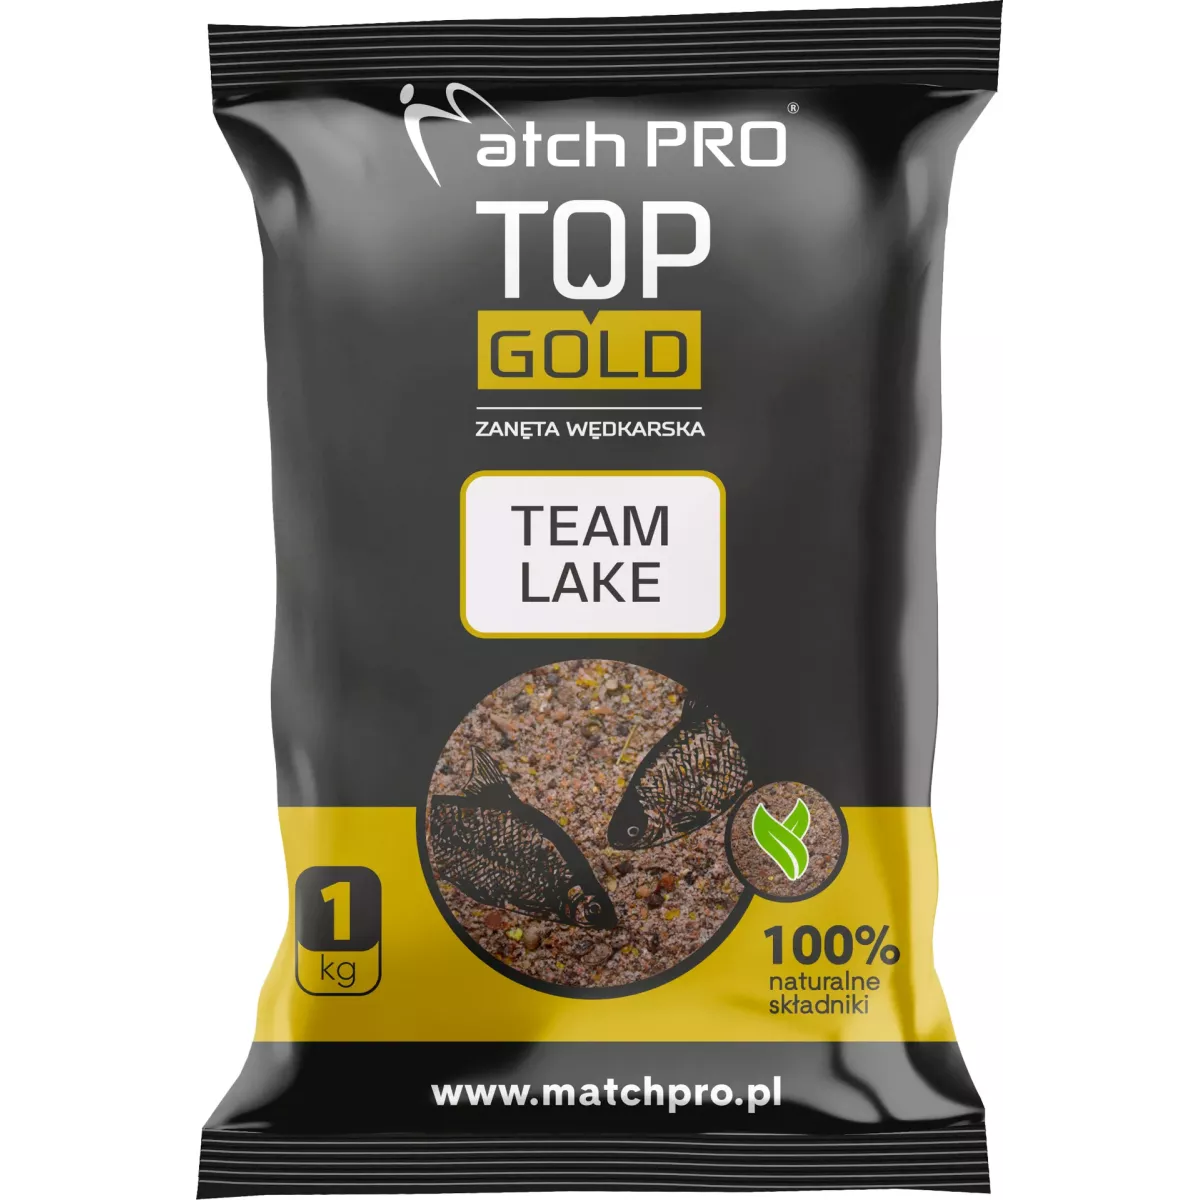 Zanęta MatchPro Top Gold 1kg - TEAM LAKE